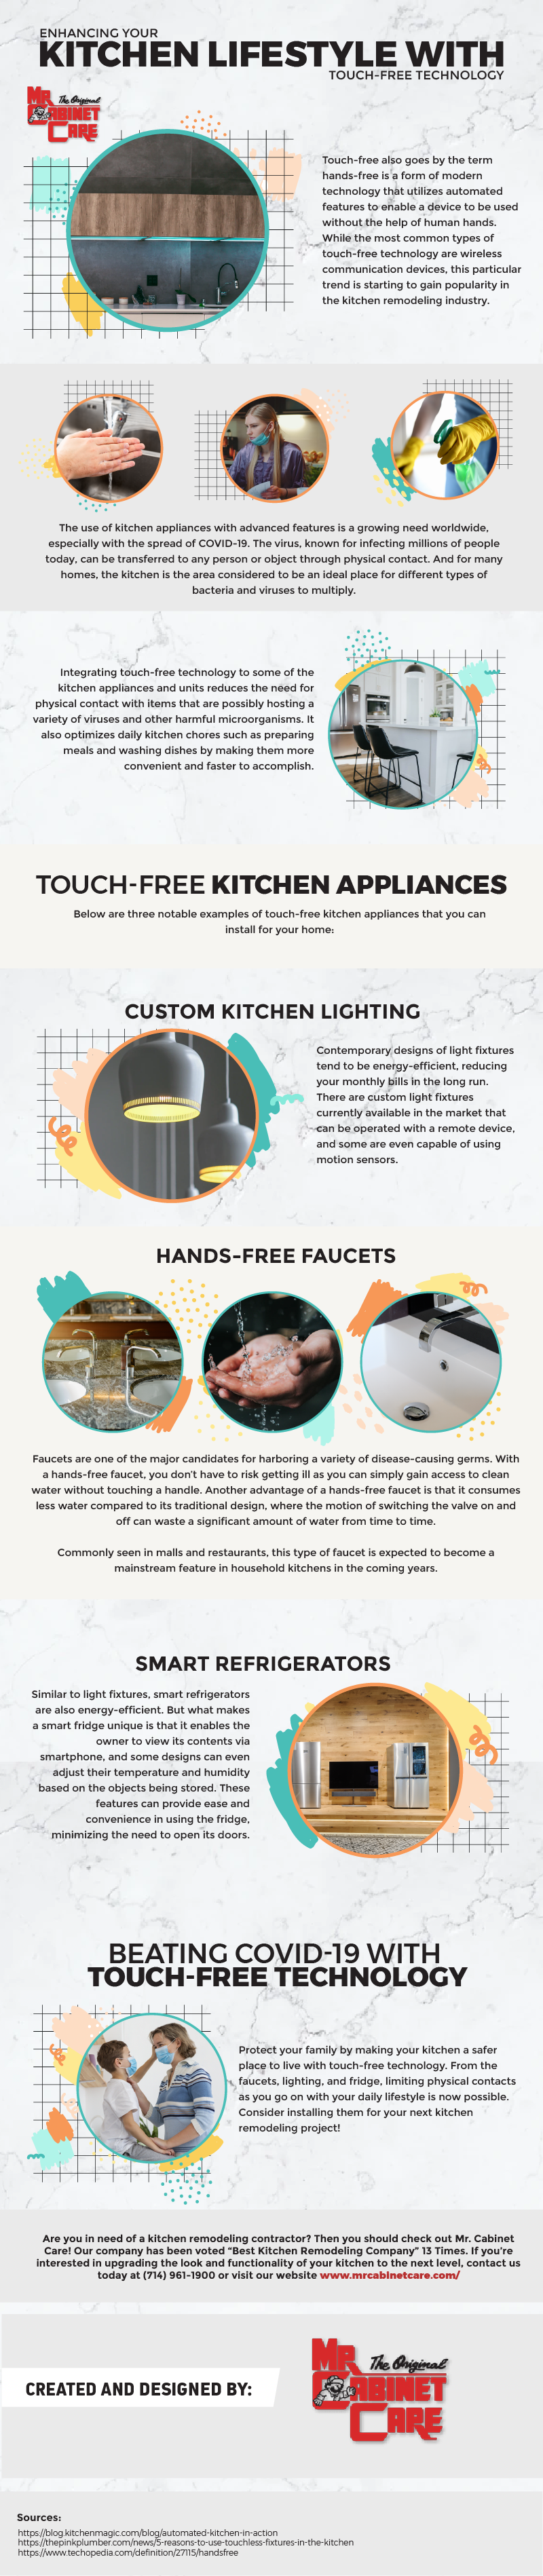 Kitchen Technology - Infographic